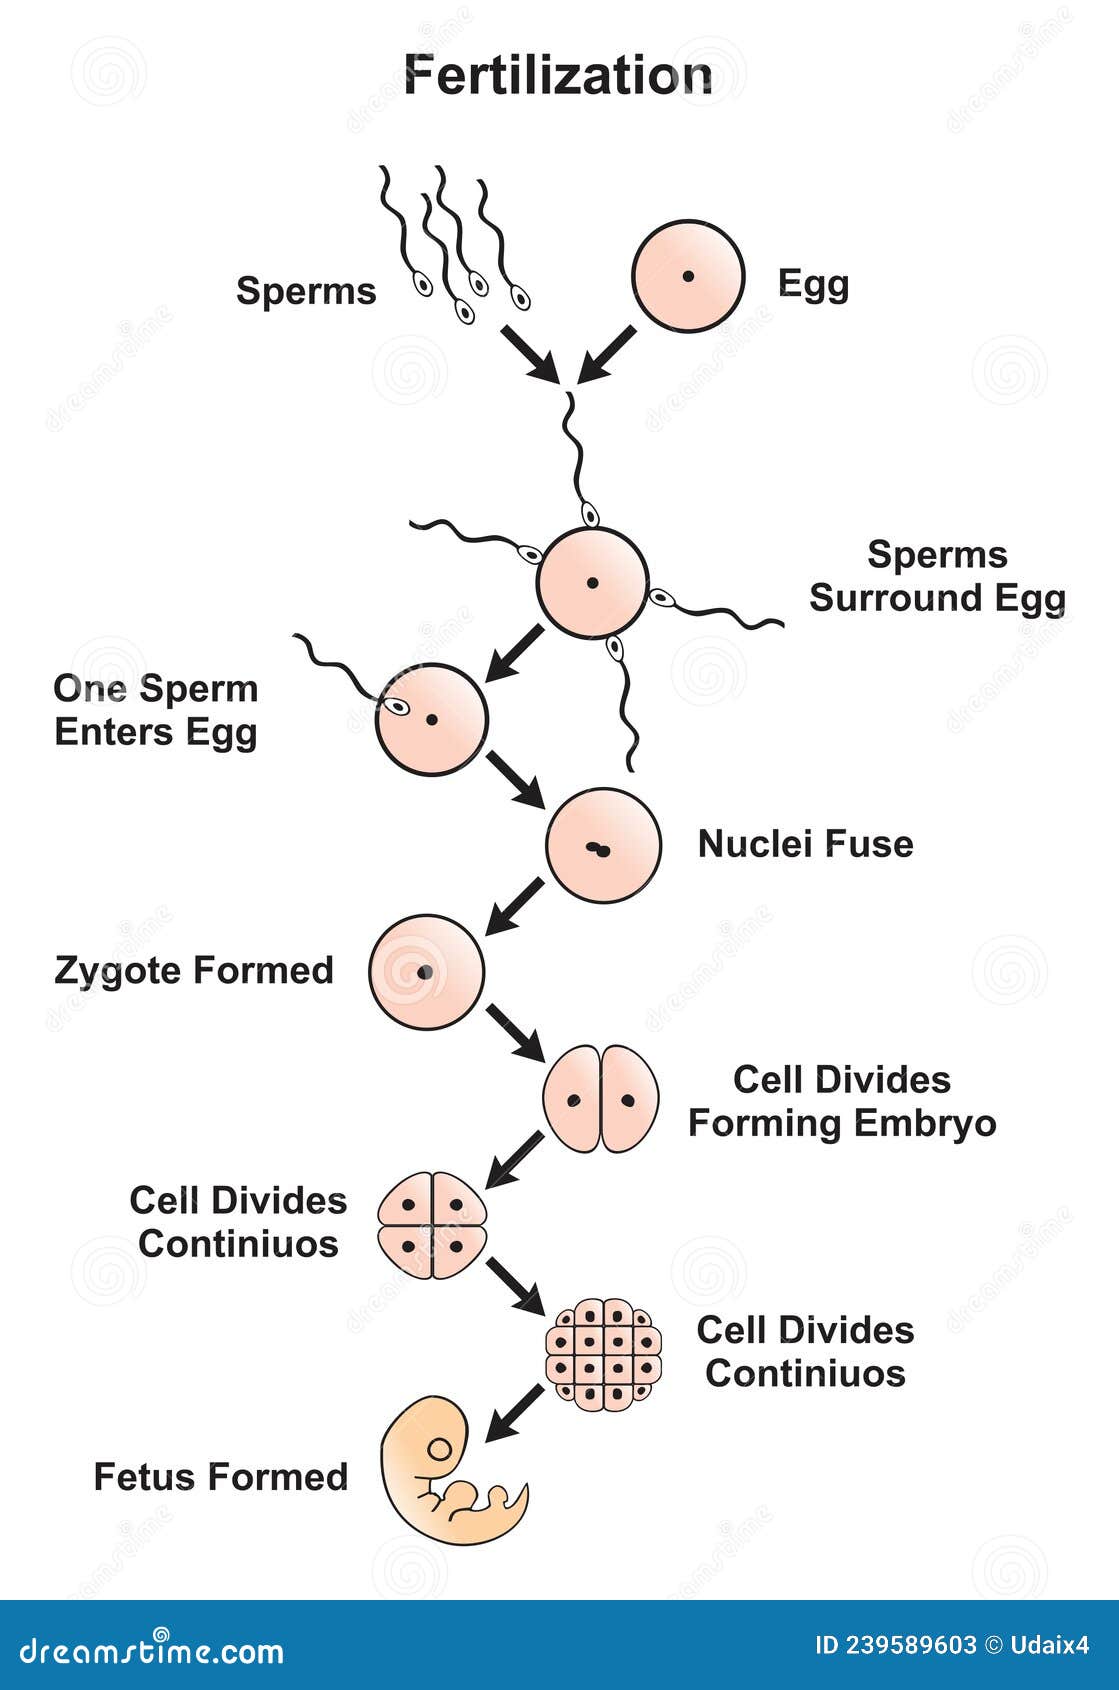 journey of sperm to egg timeline